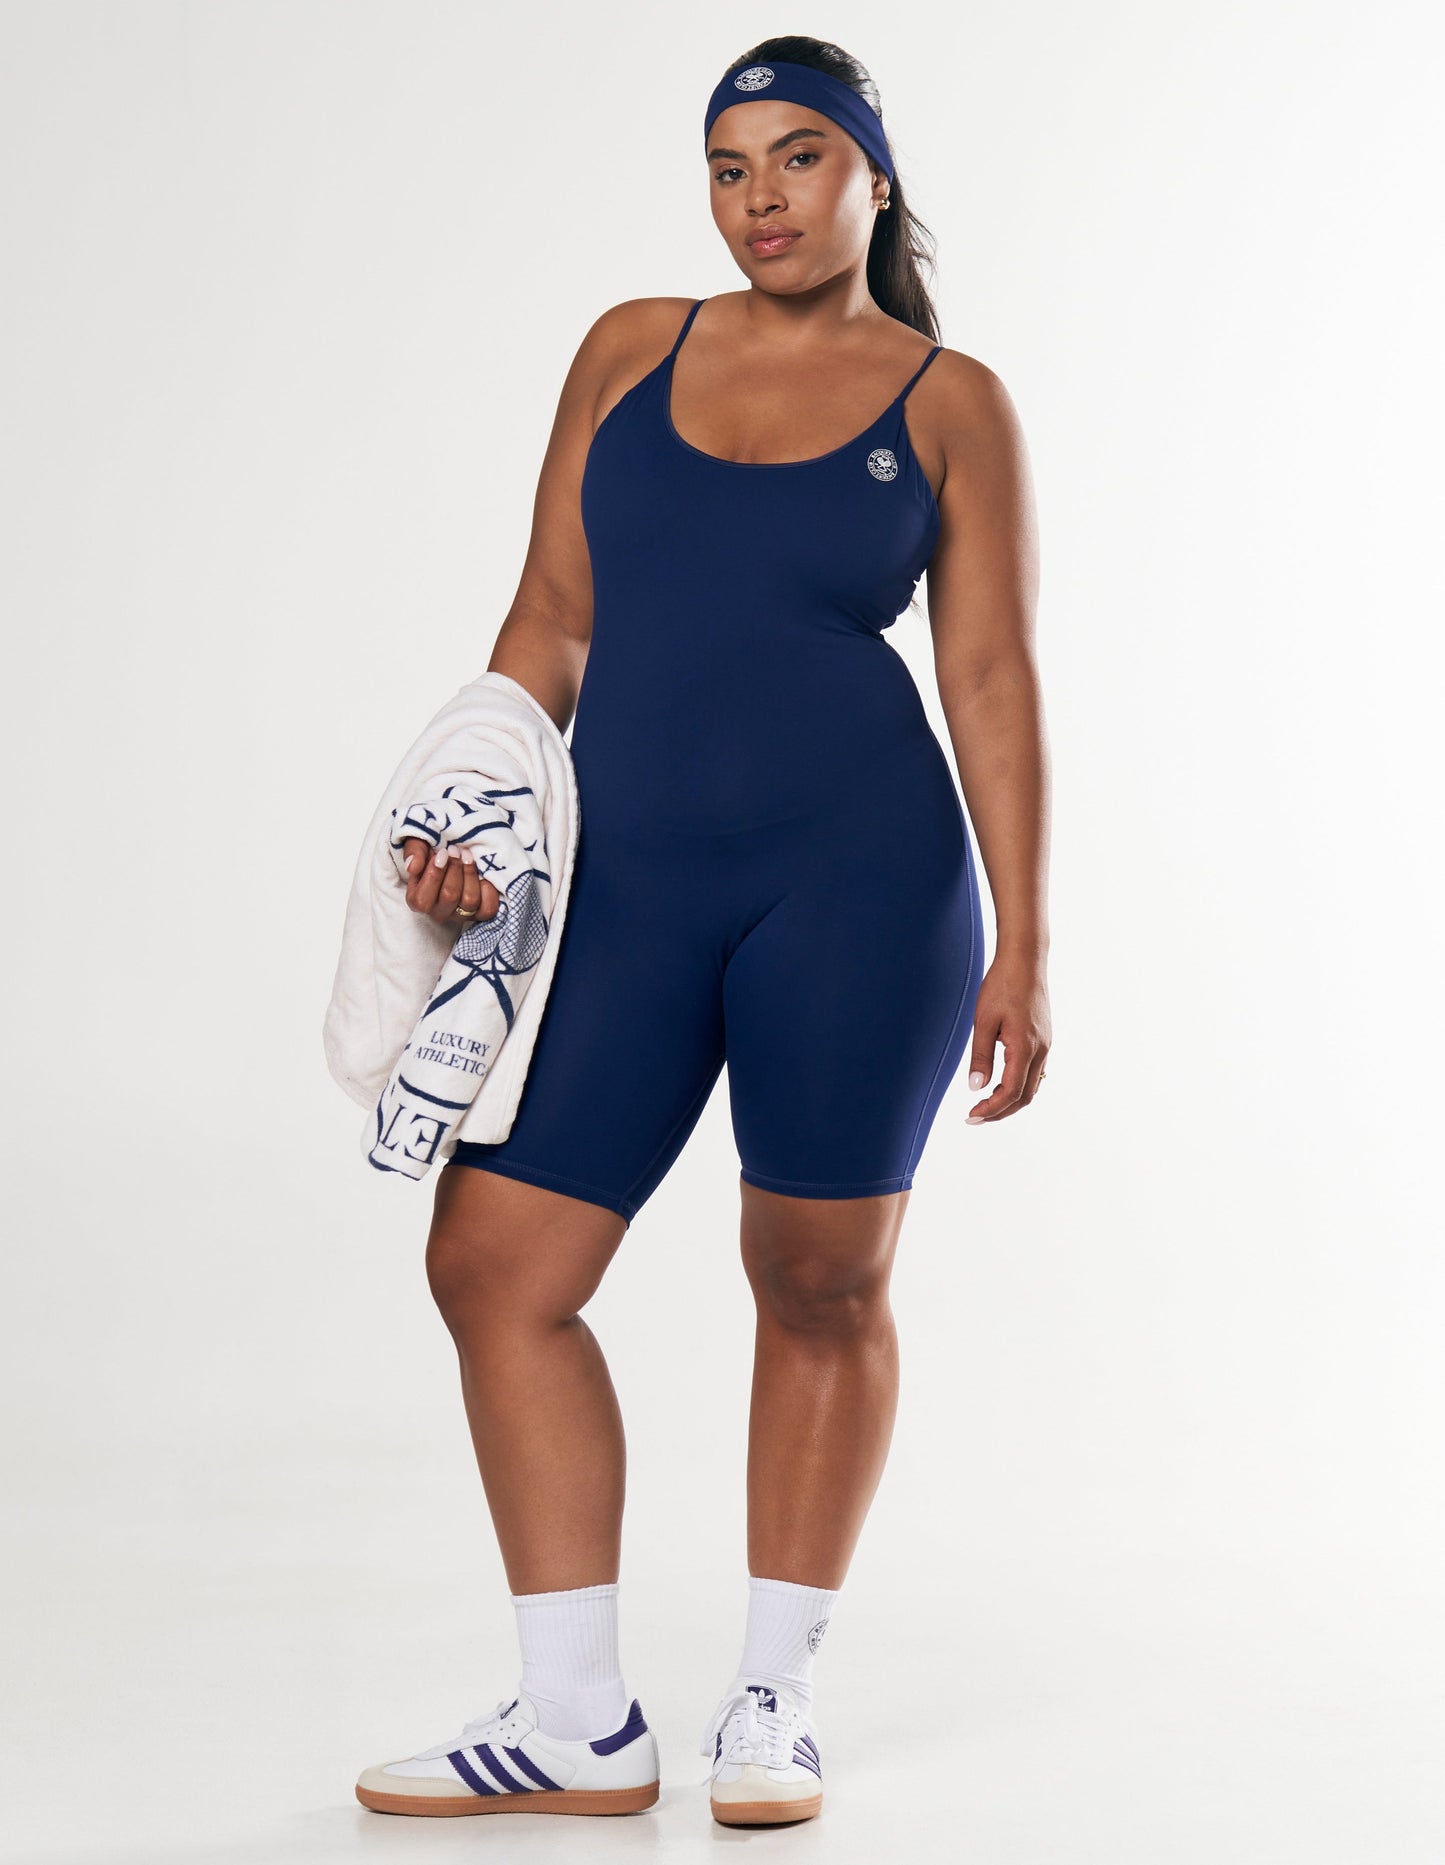 Racquet Club Short Leg Bodysuit - Navy